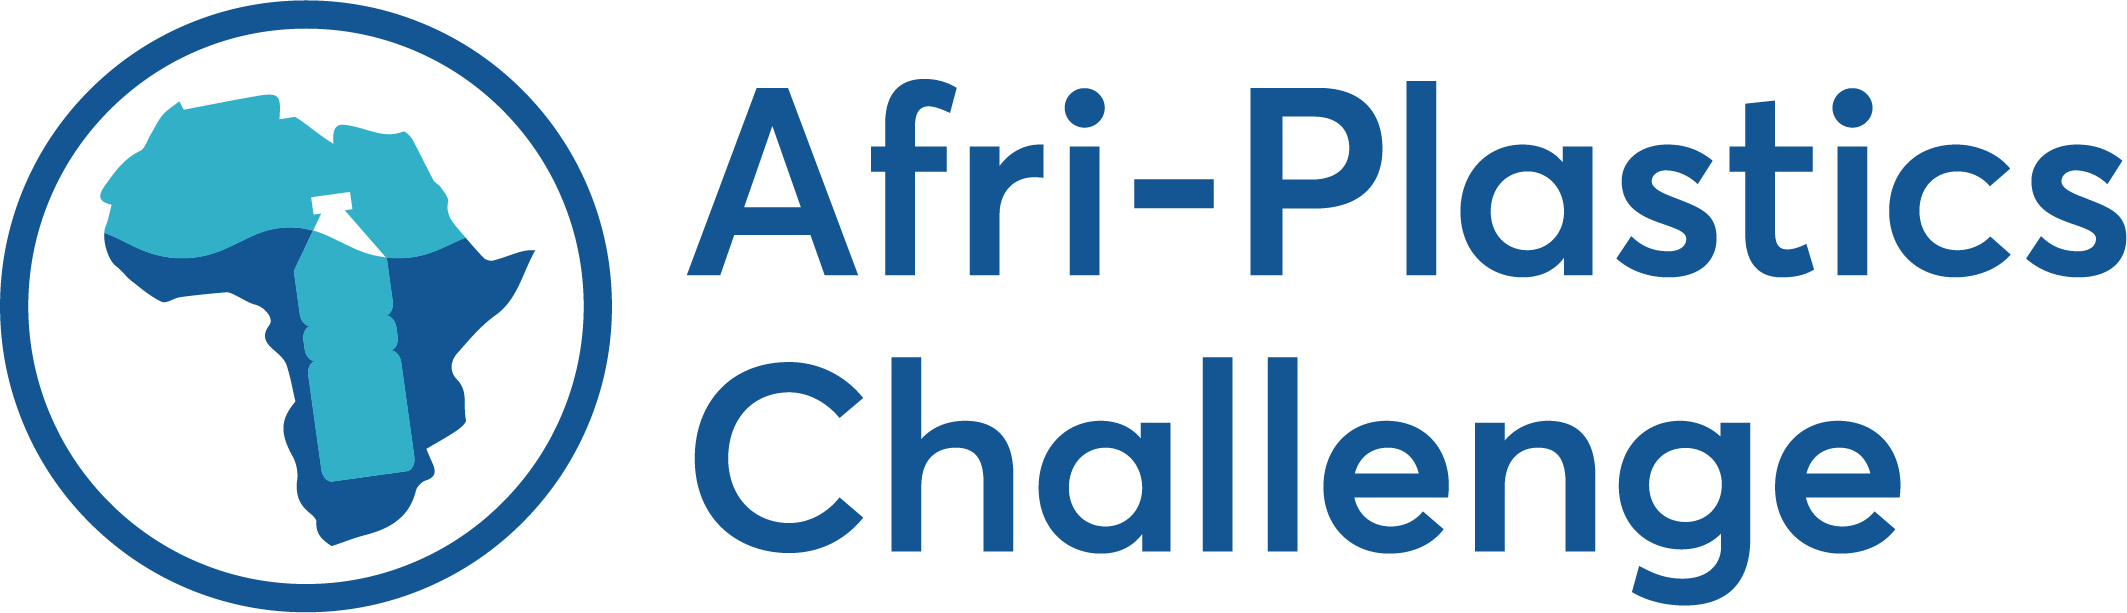 Afri-plastics challenge